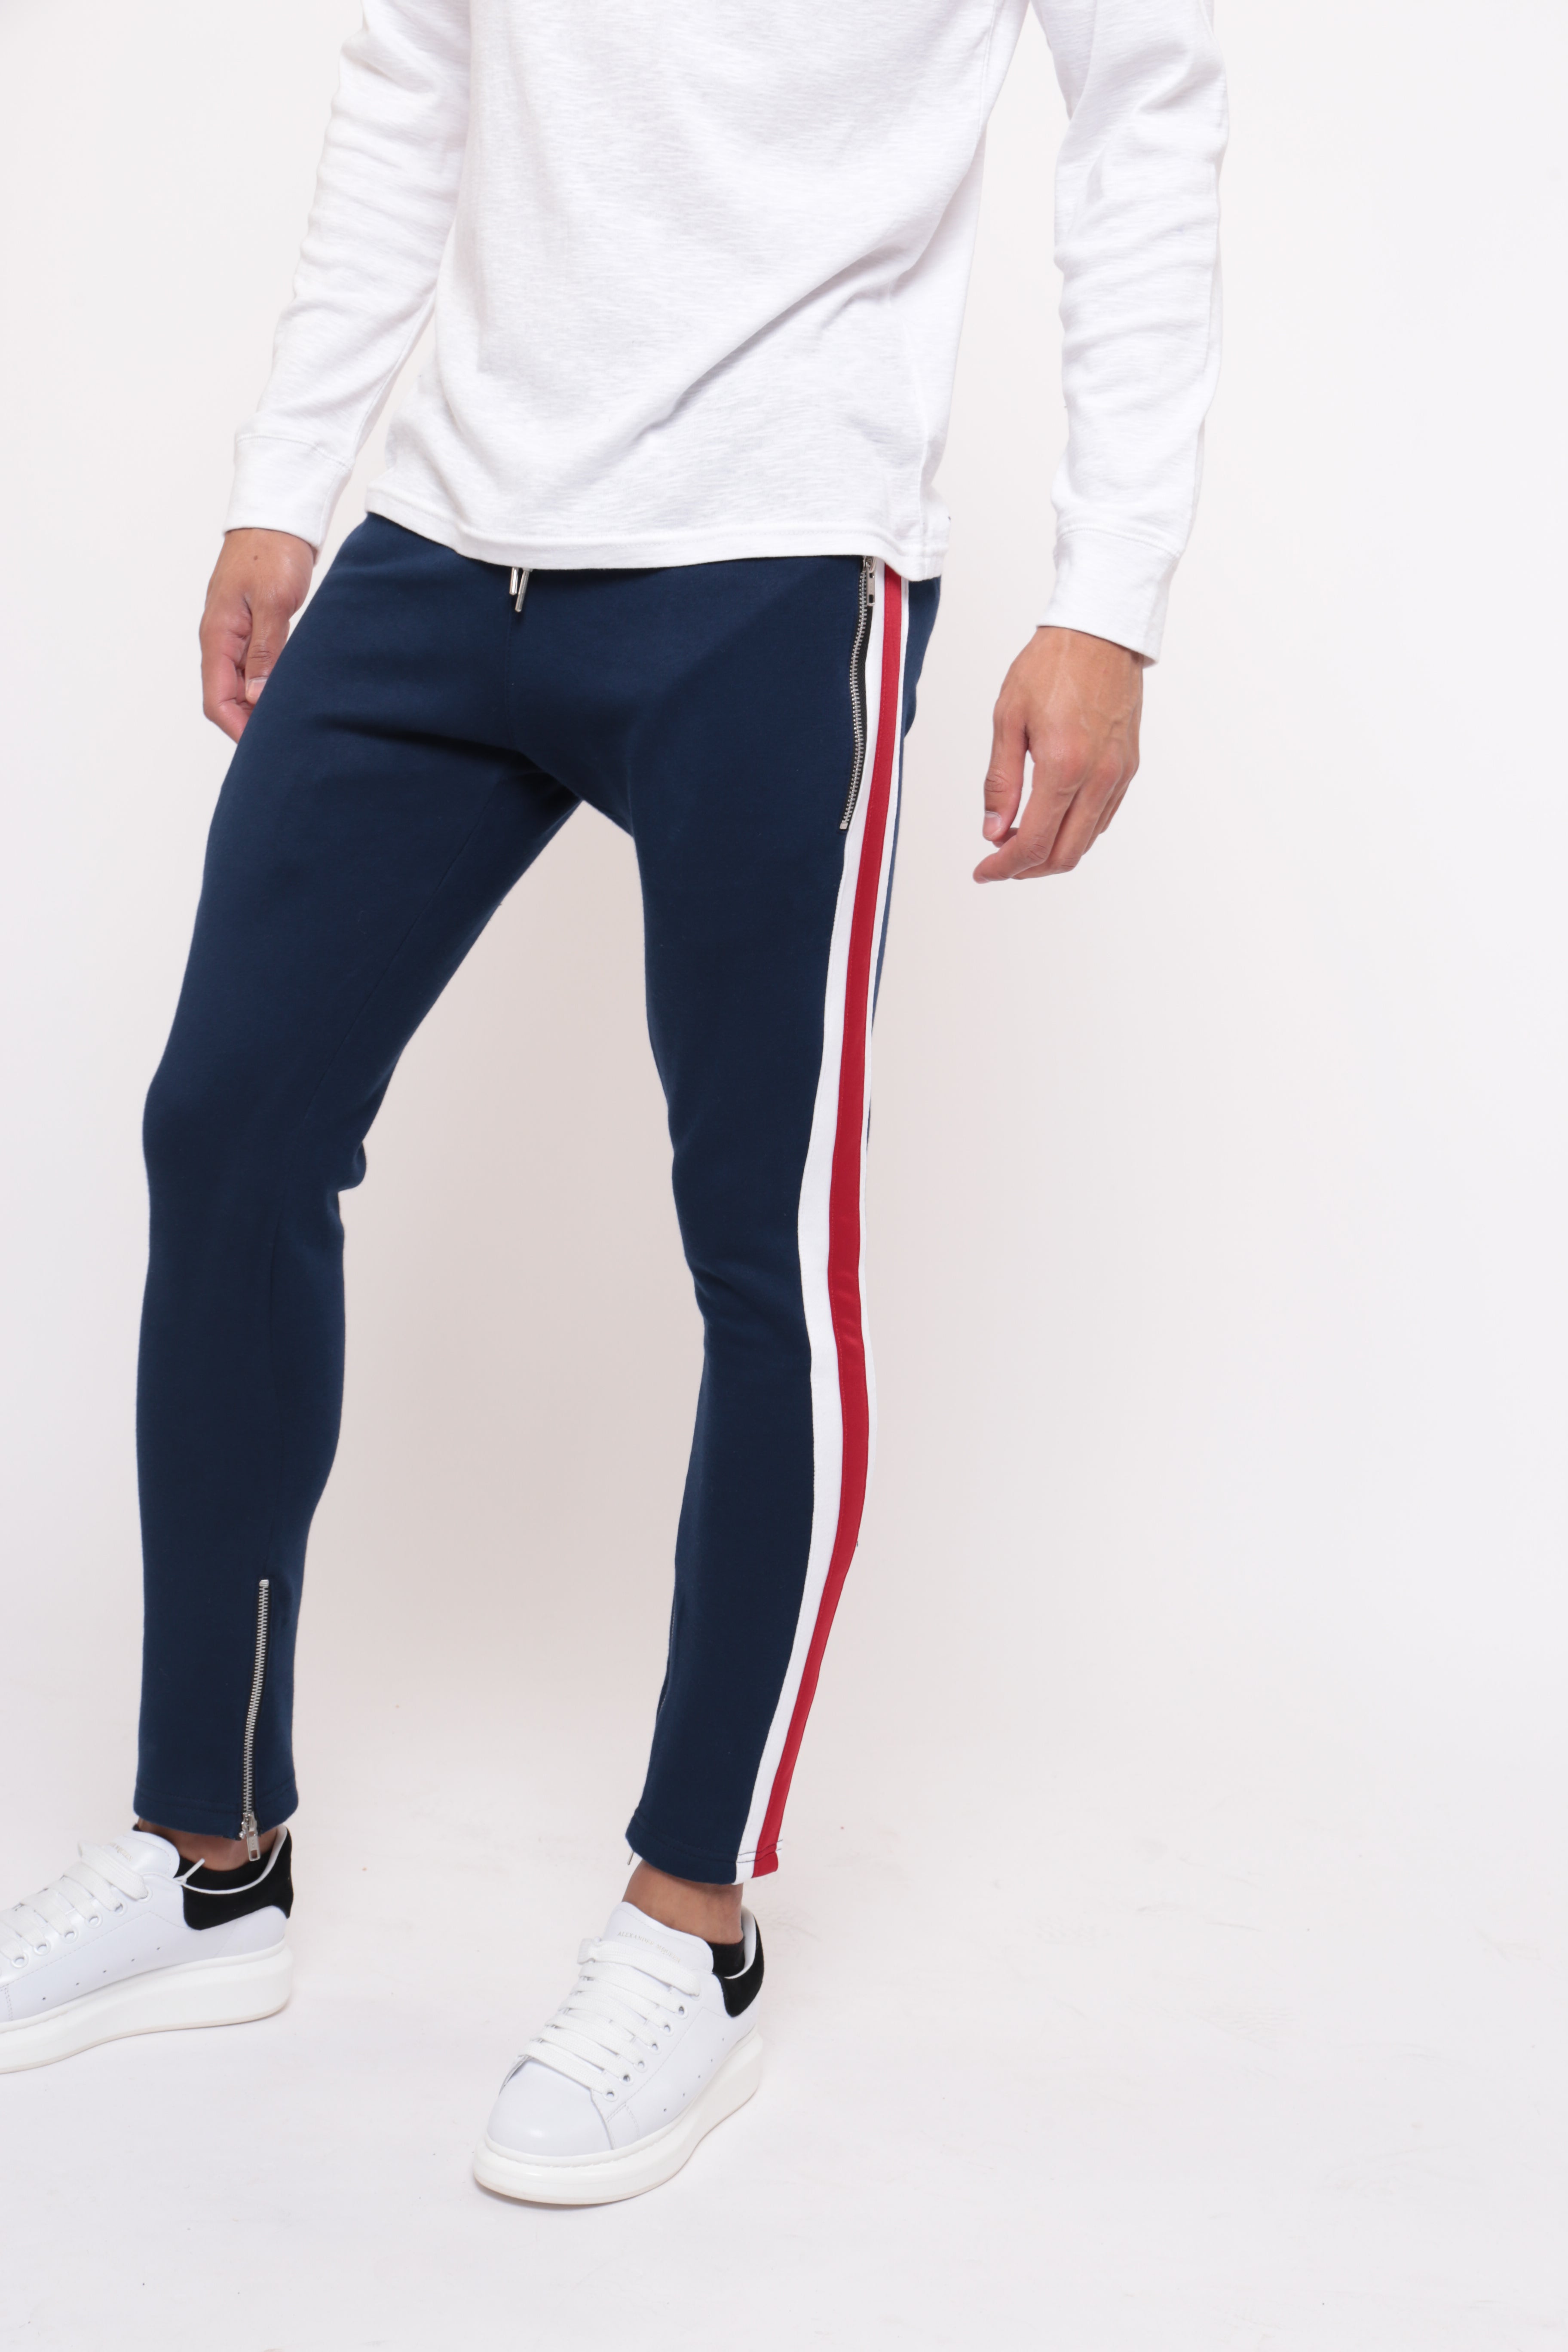 Black Double Side Stripe Joggers | Trousers | PrettyLittleThing